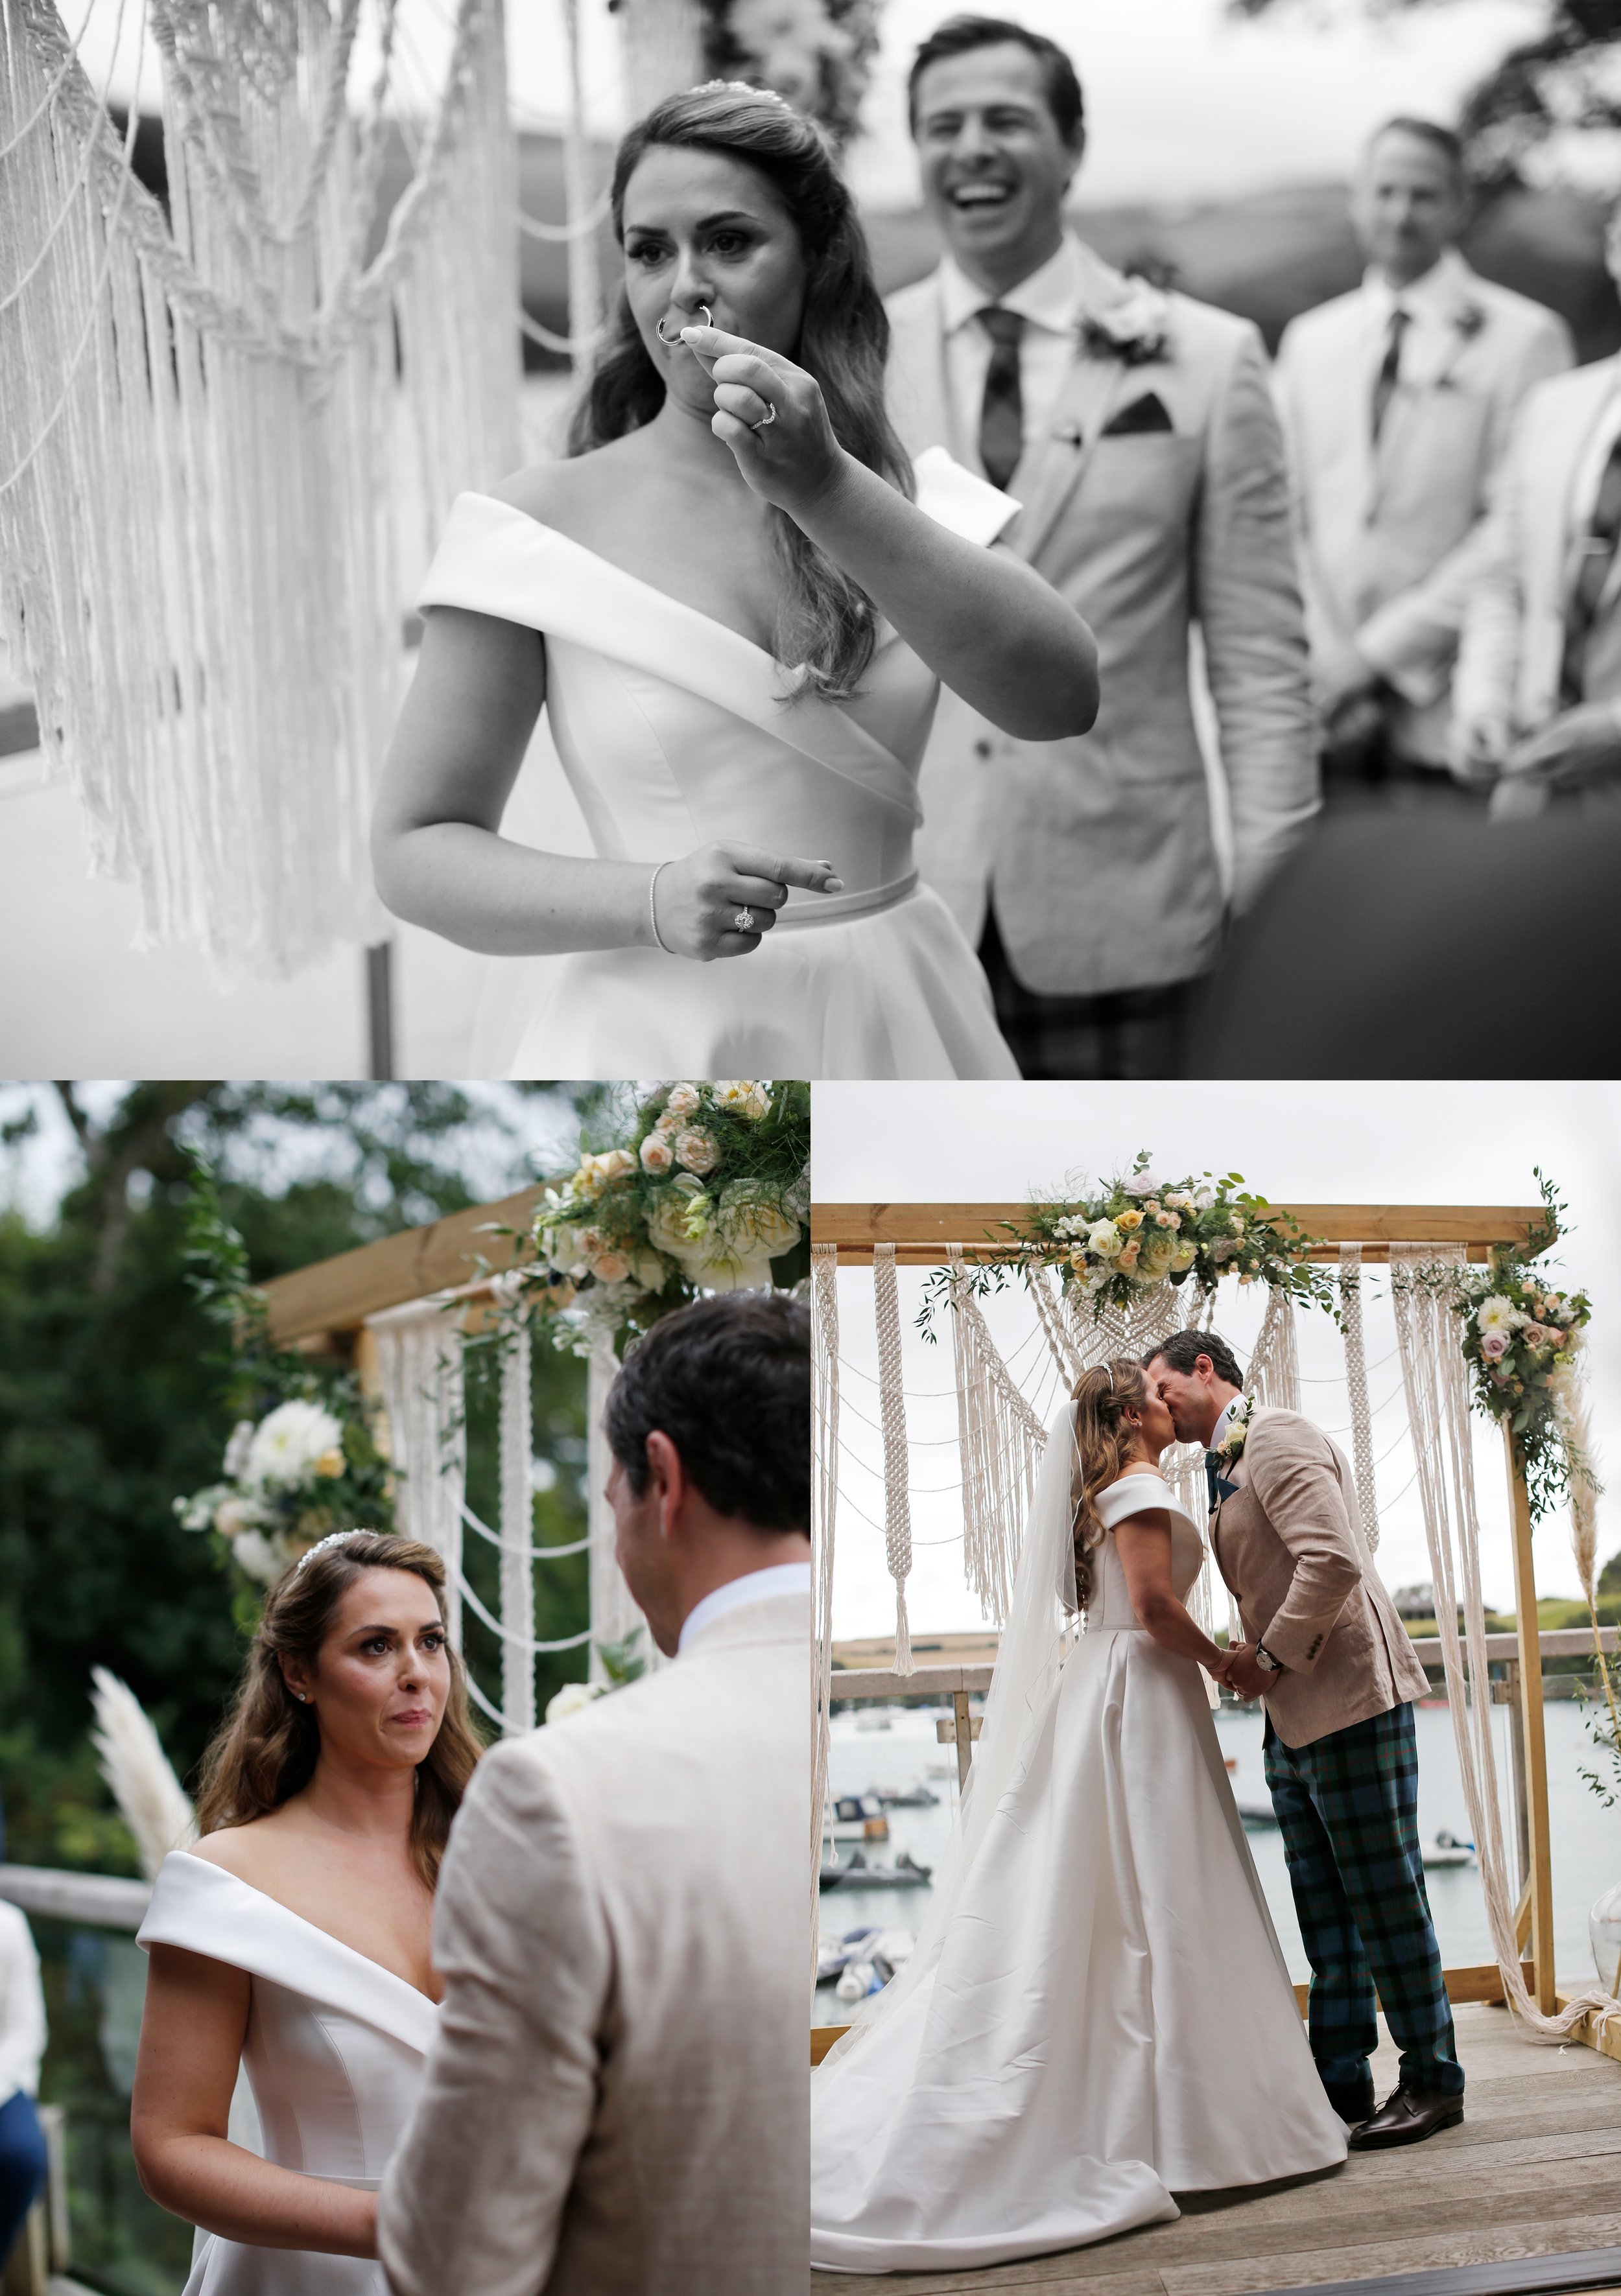 PortwaterHouse+Wedding+Photography+_+Brett+Harkness-21.jpg